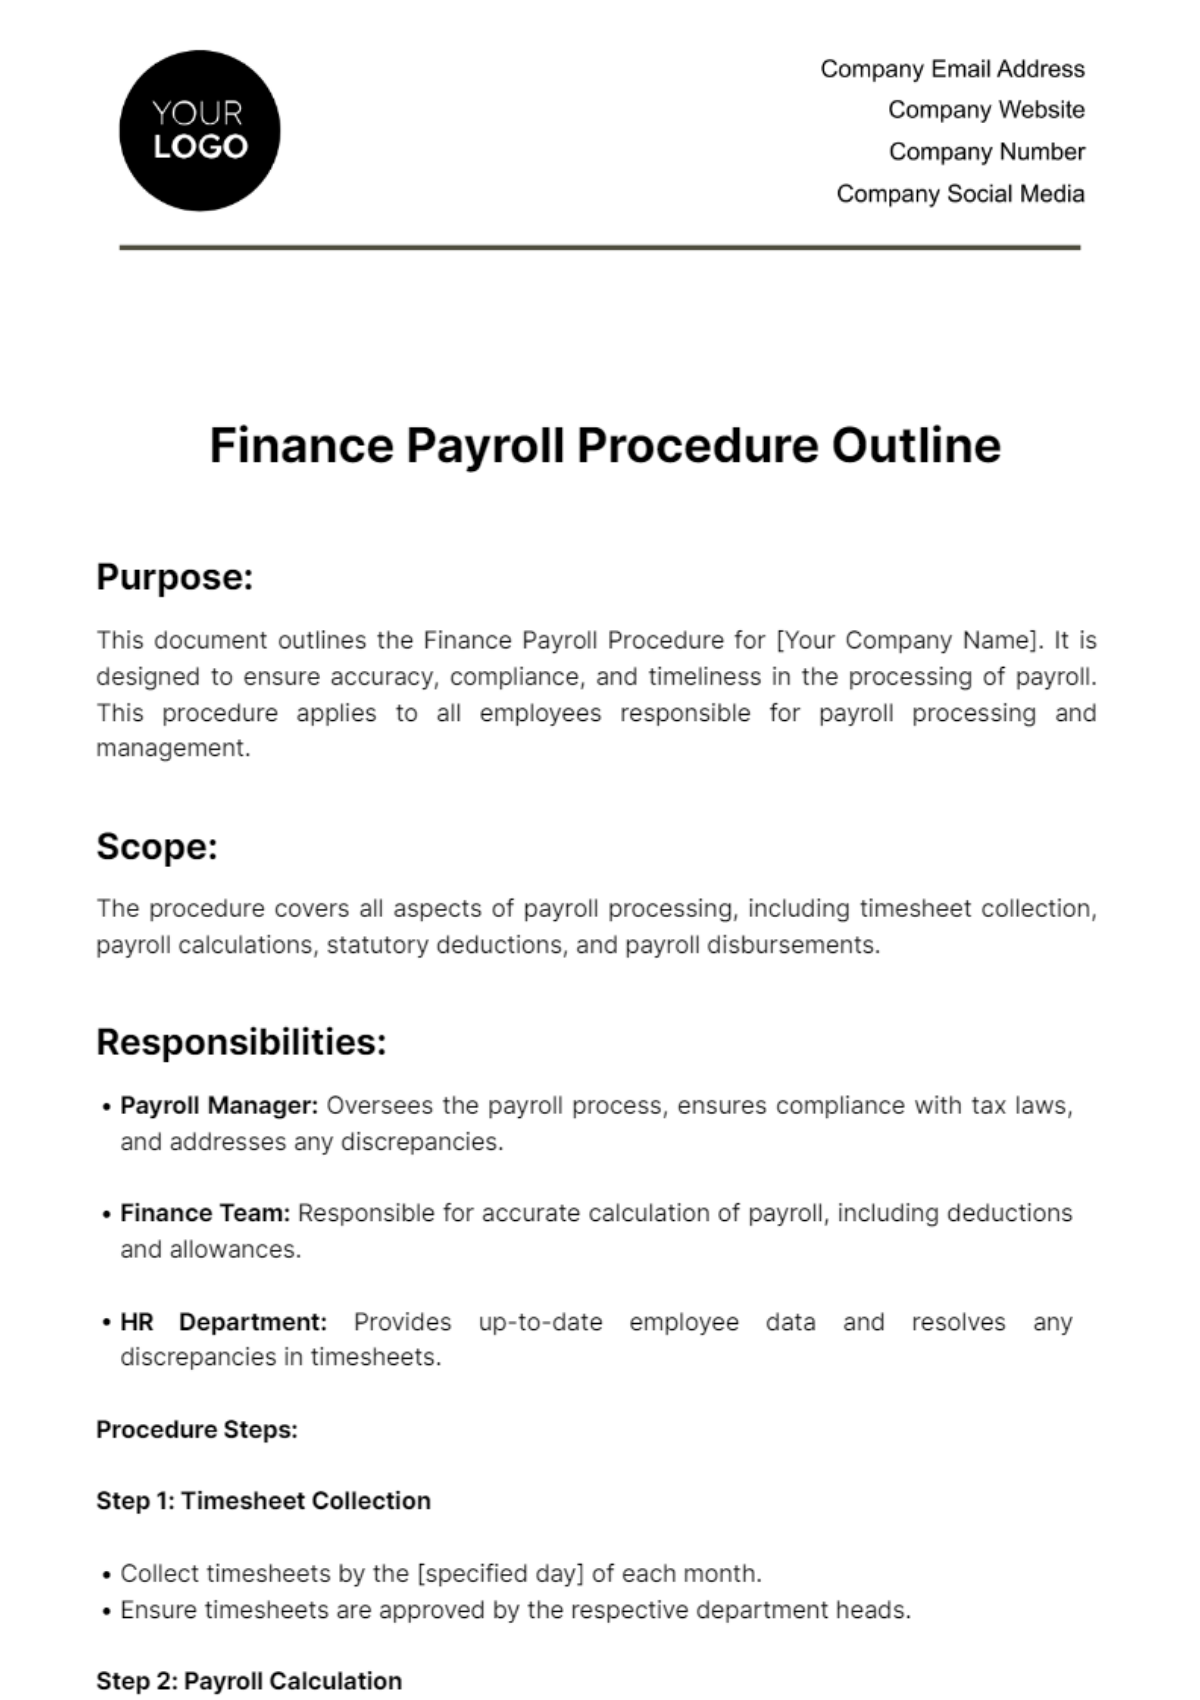 Finance Payroll Procedure Outline Template